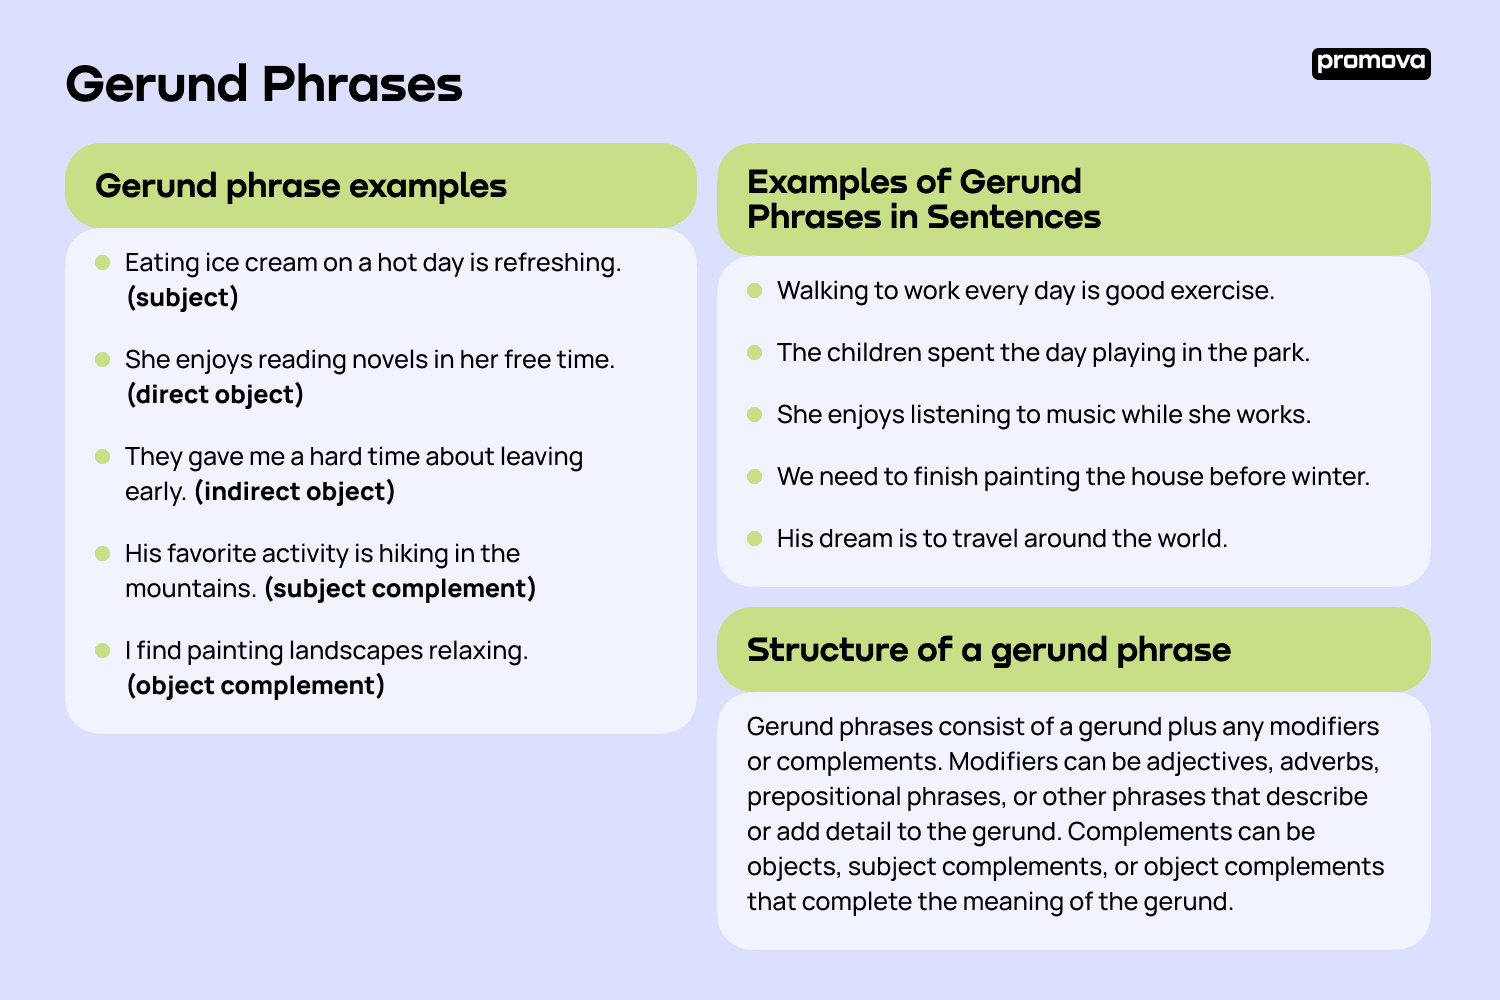 Gerund phrase examples